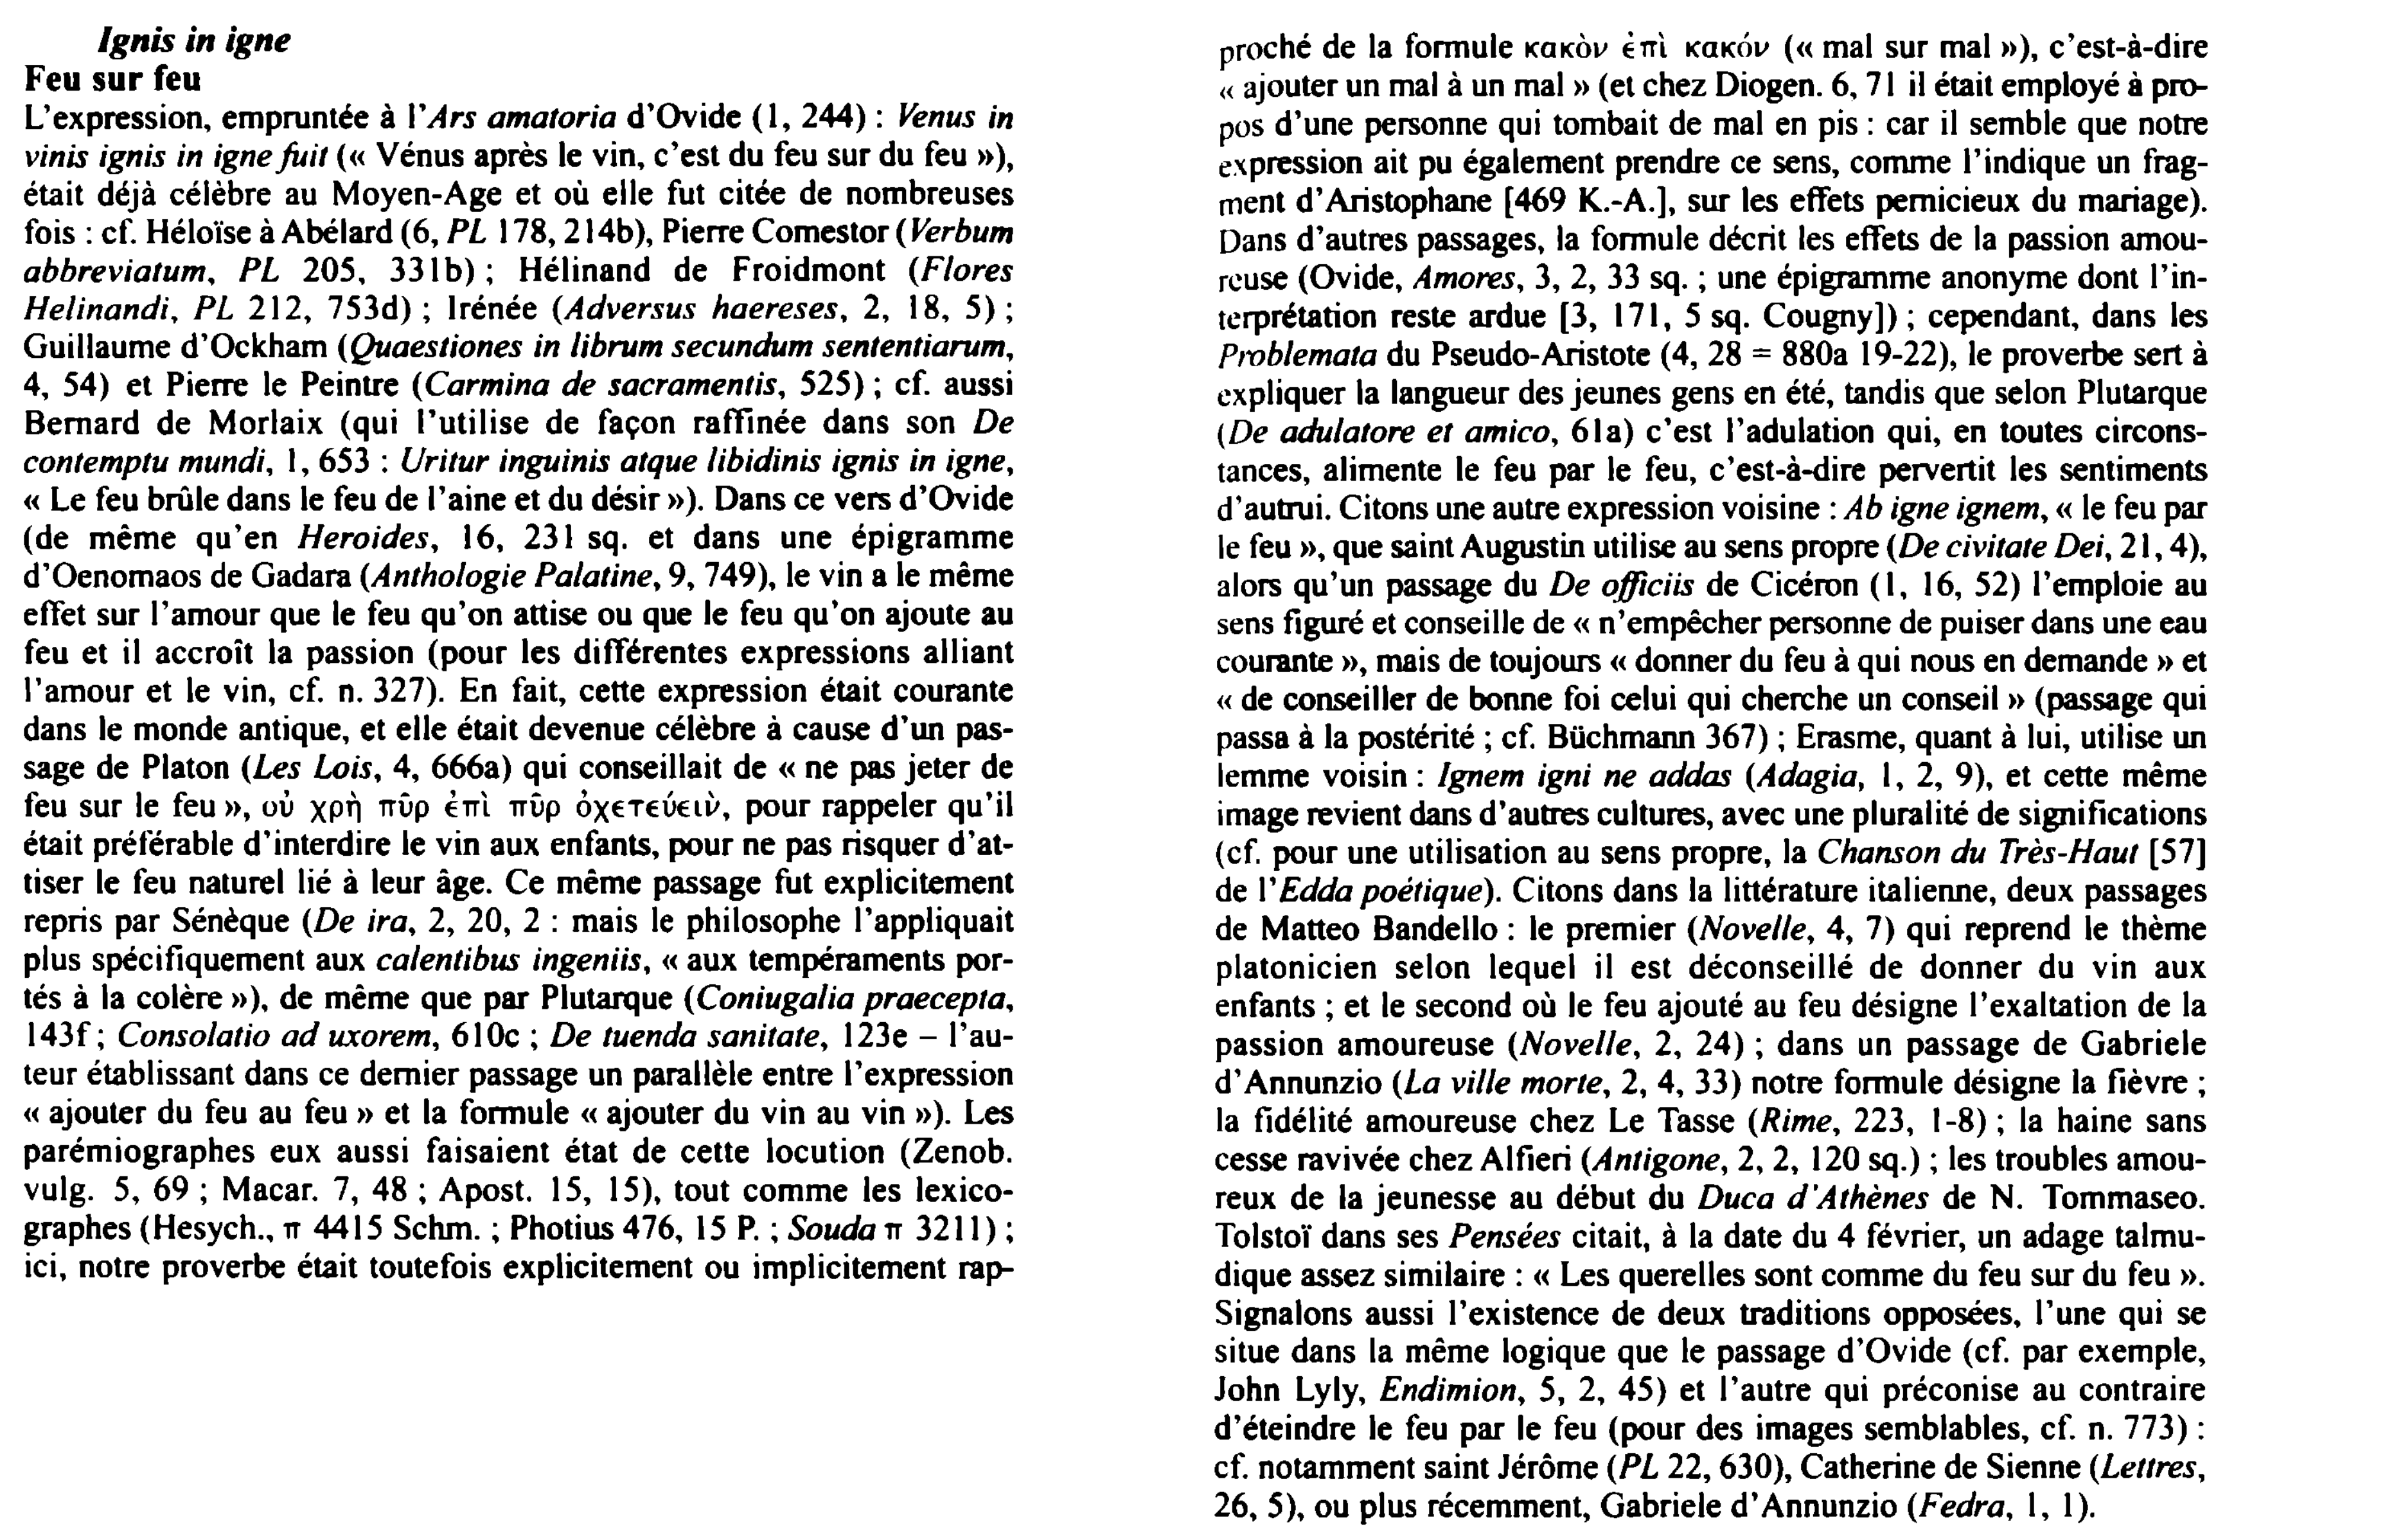 Prévisualisation du document lgnis in igne
Feu sur feu
L'expression.. empruntée à l"Ars amatoria d'Ovide (1,244): Venus in
vinis ignis in ignefuit (>...